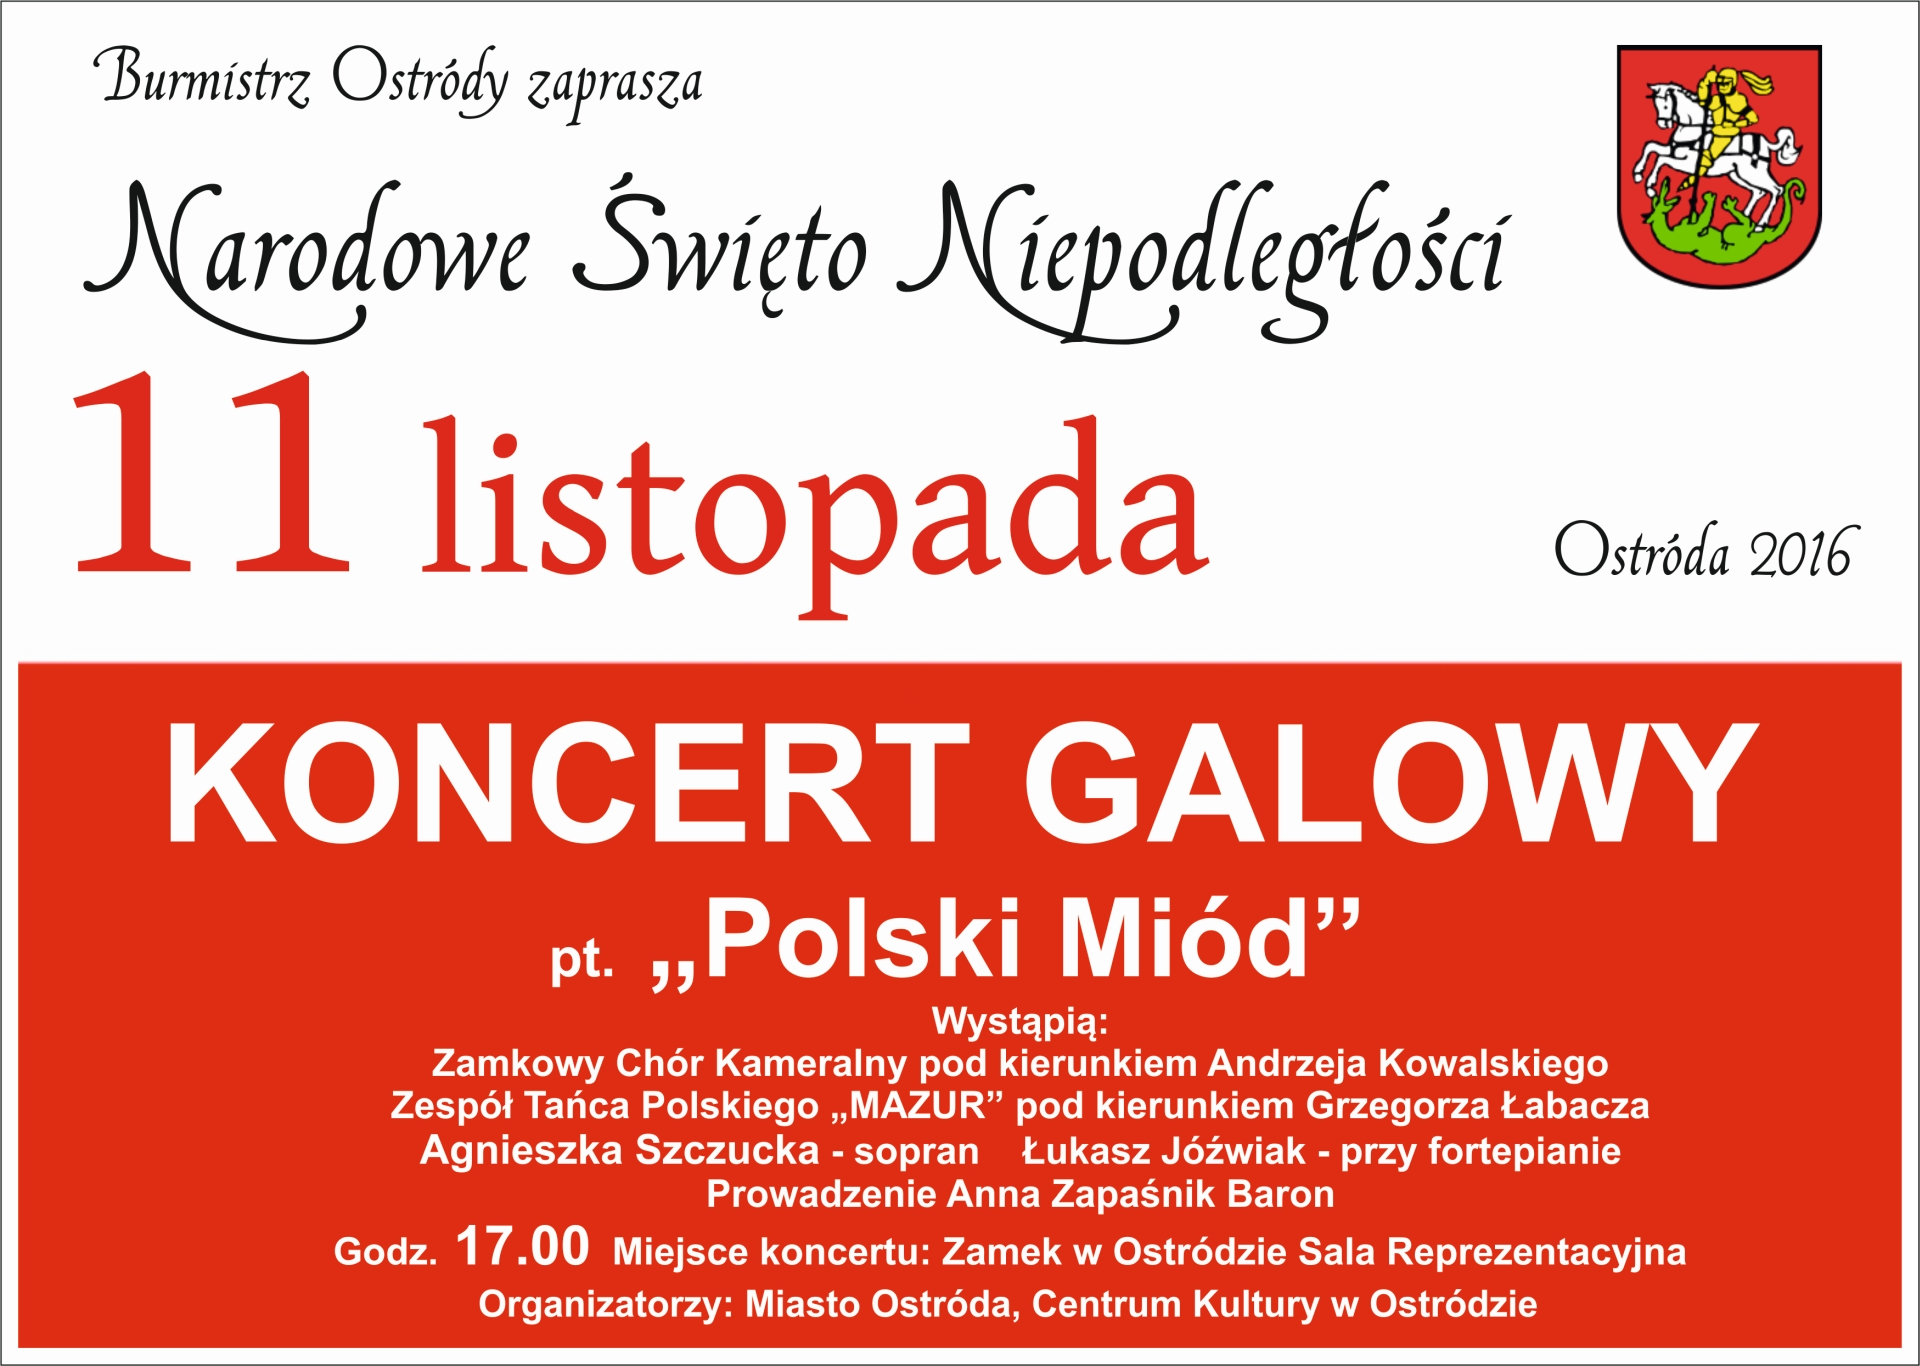 Koncert Galowy pt.”Polski Miód”